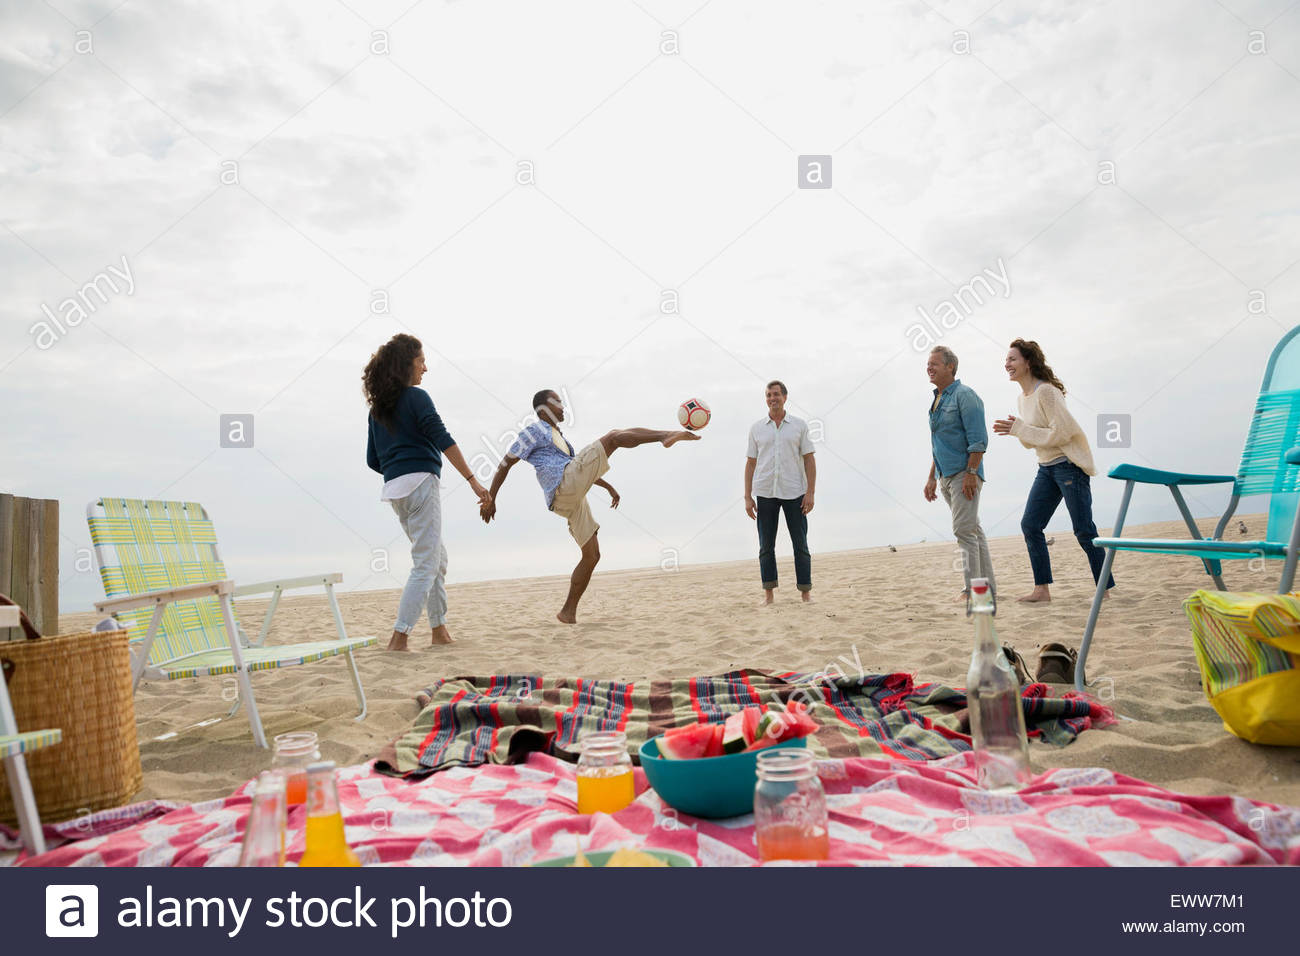 Friends playing soccer near beach picnic Stock Photo